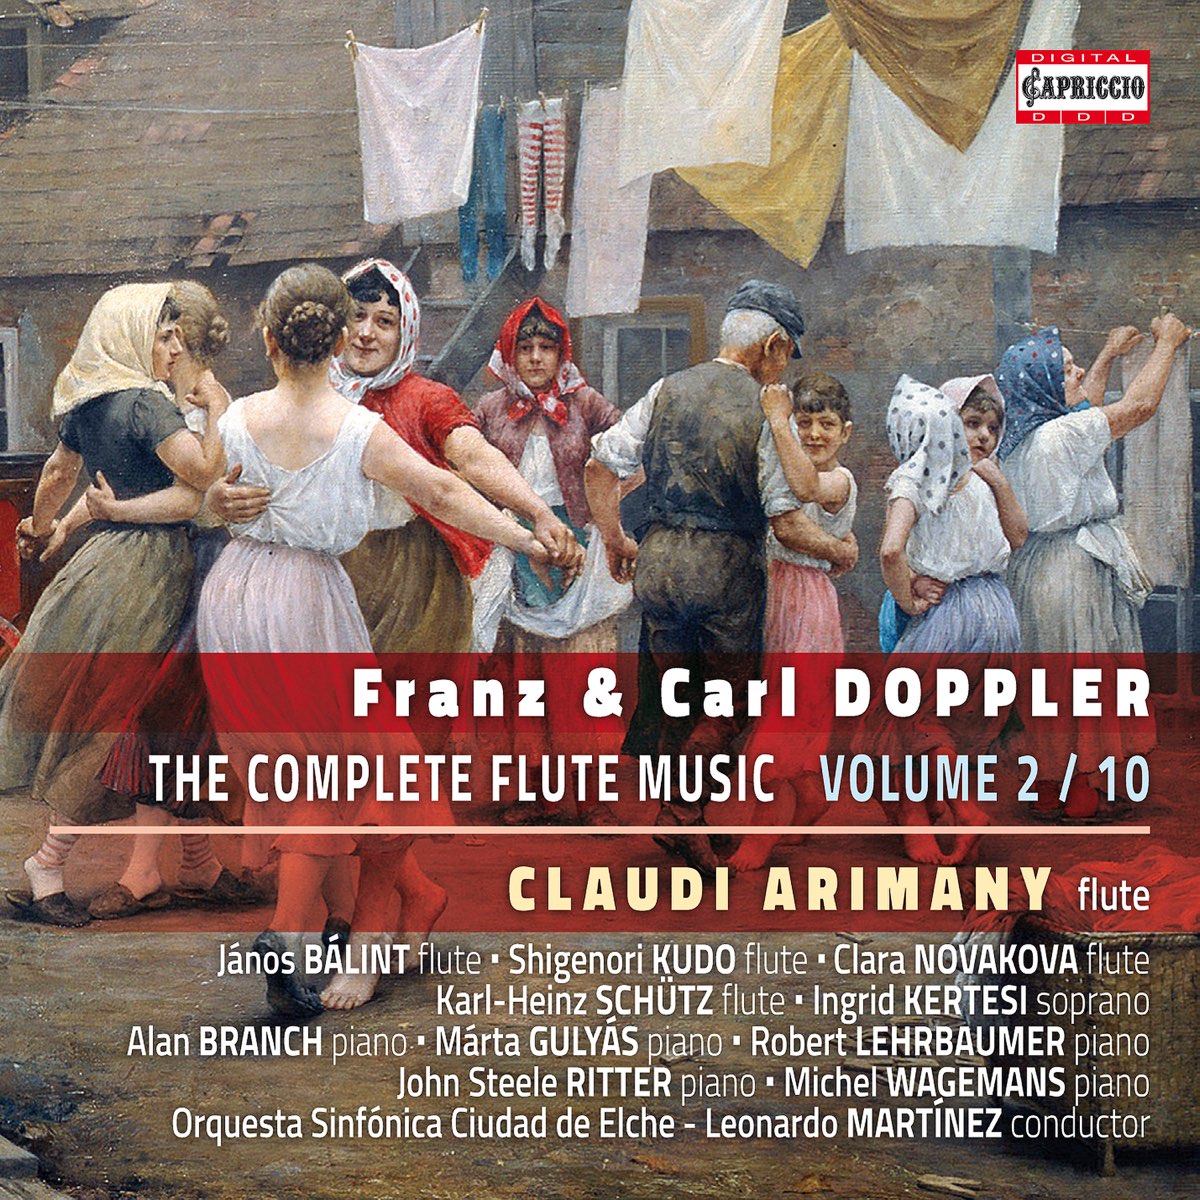 F. & K. Doppler: The Complete Flute Music, Vol. 2 - Album by Claudi Arimany  - Apple Music